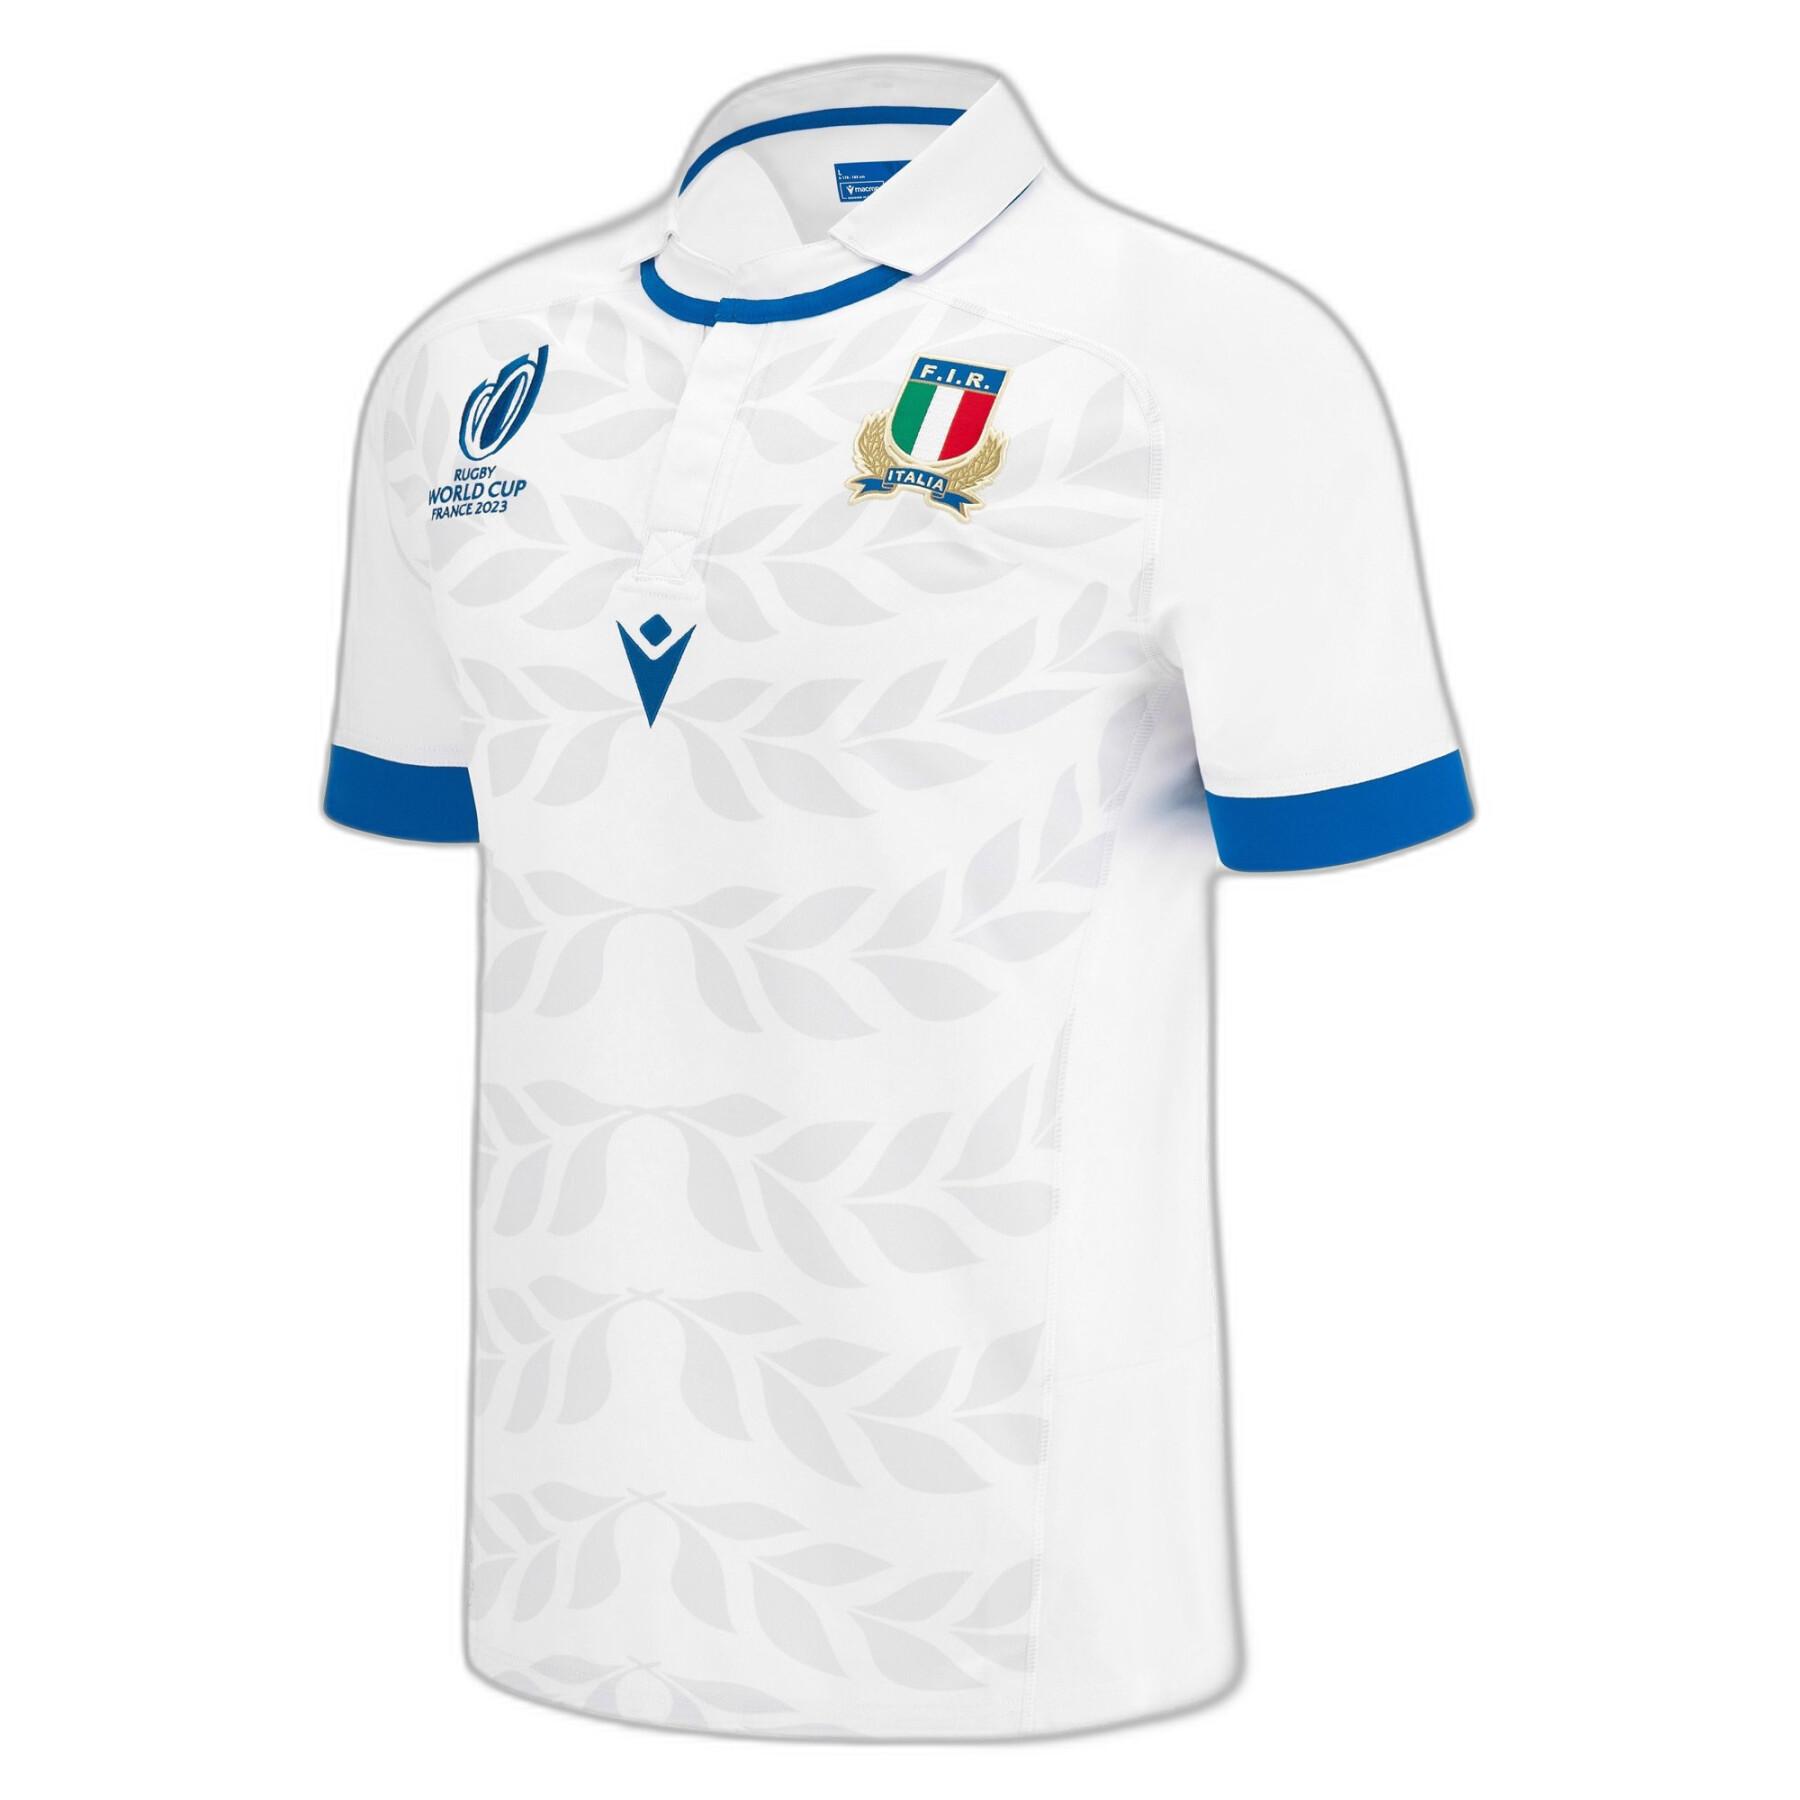 Outdoor jersey Italie RWC 2023